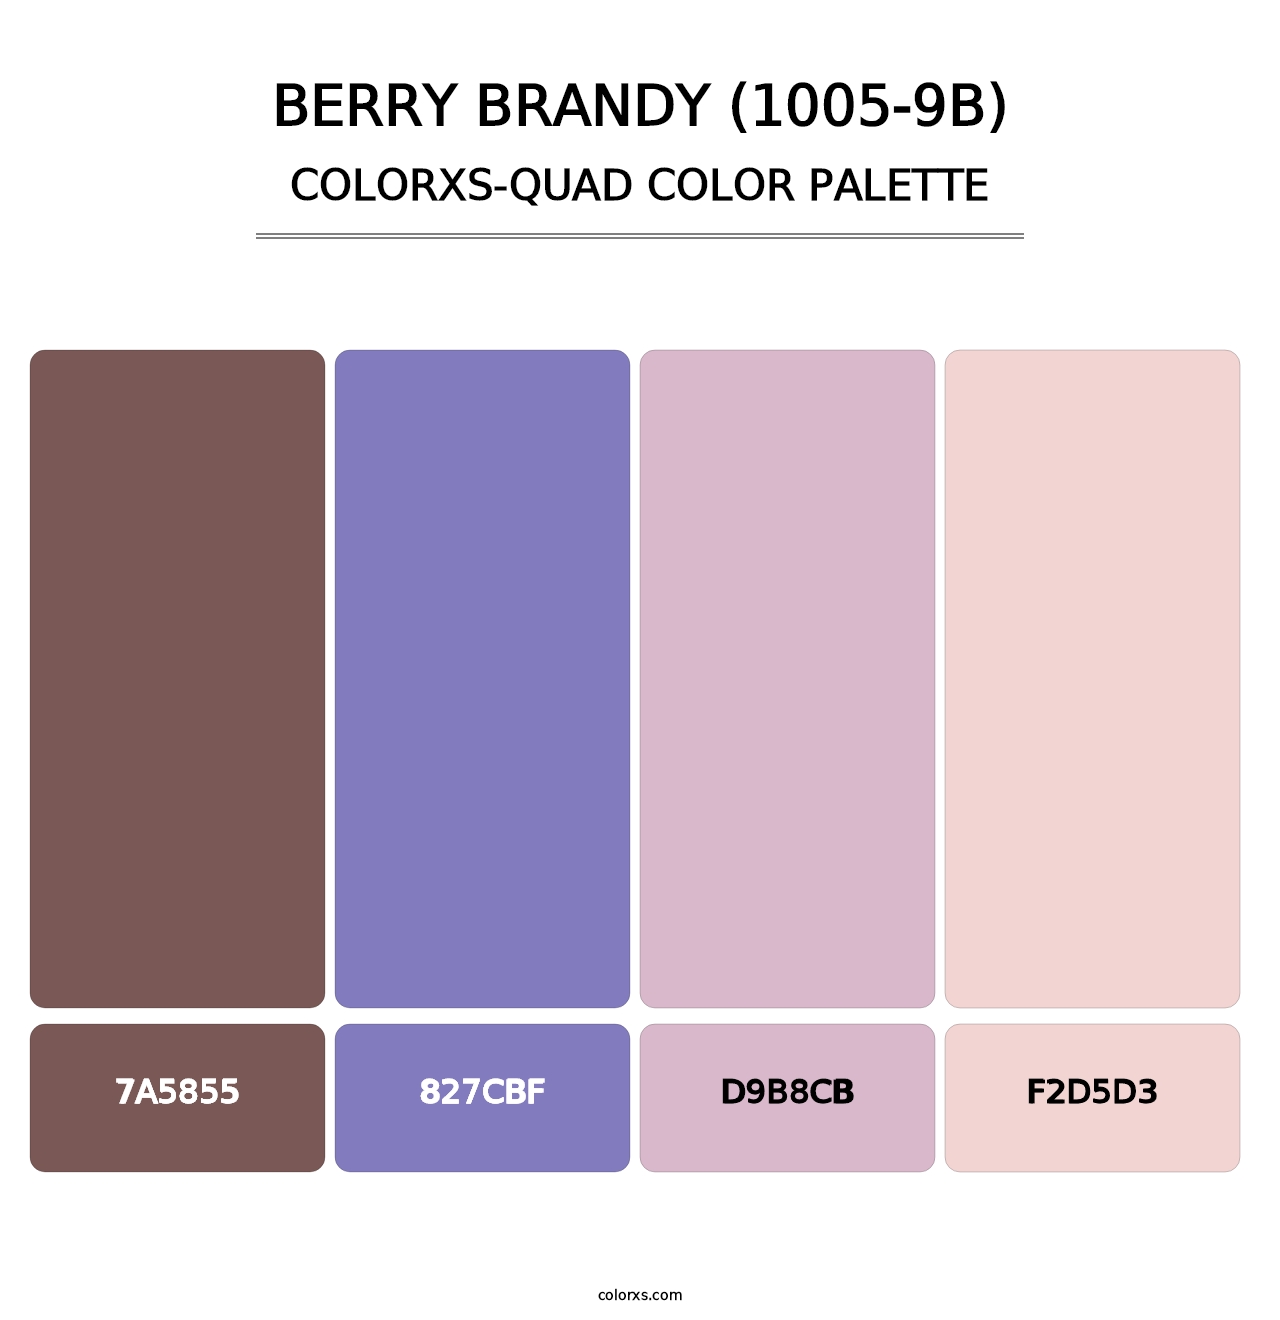 Berry Brandy (1005-9B) - Colorxs Quad Palette